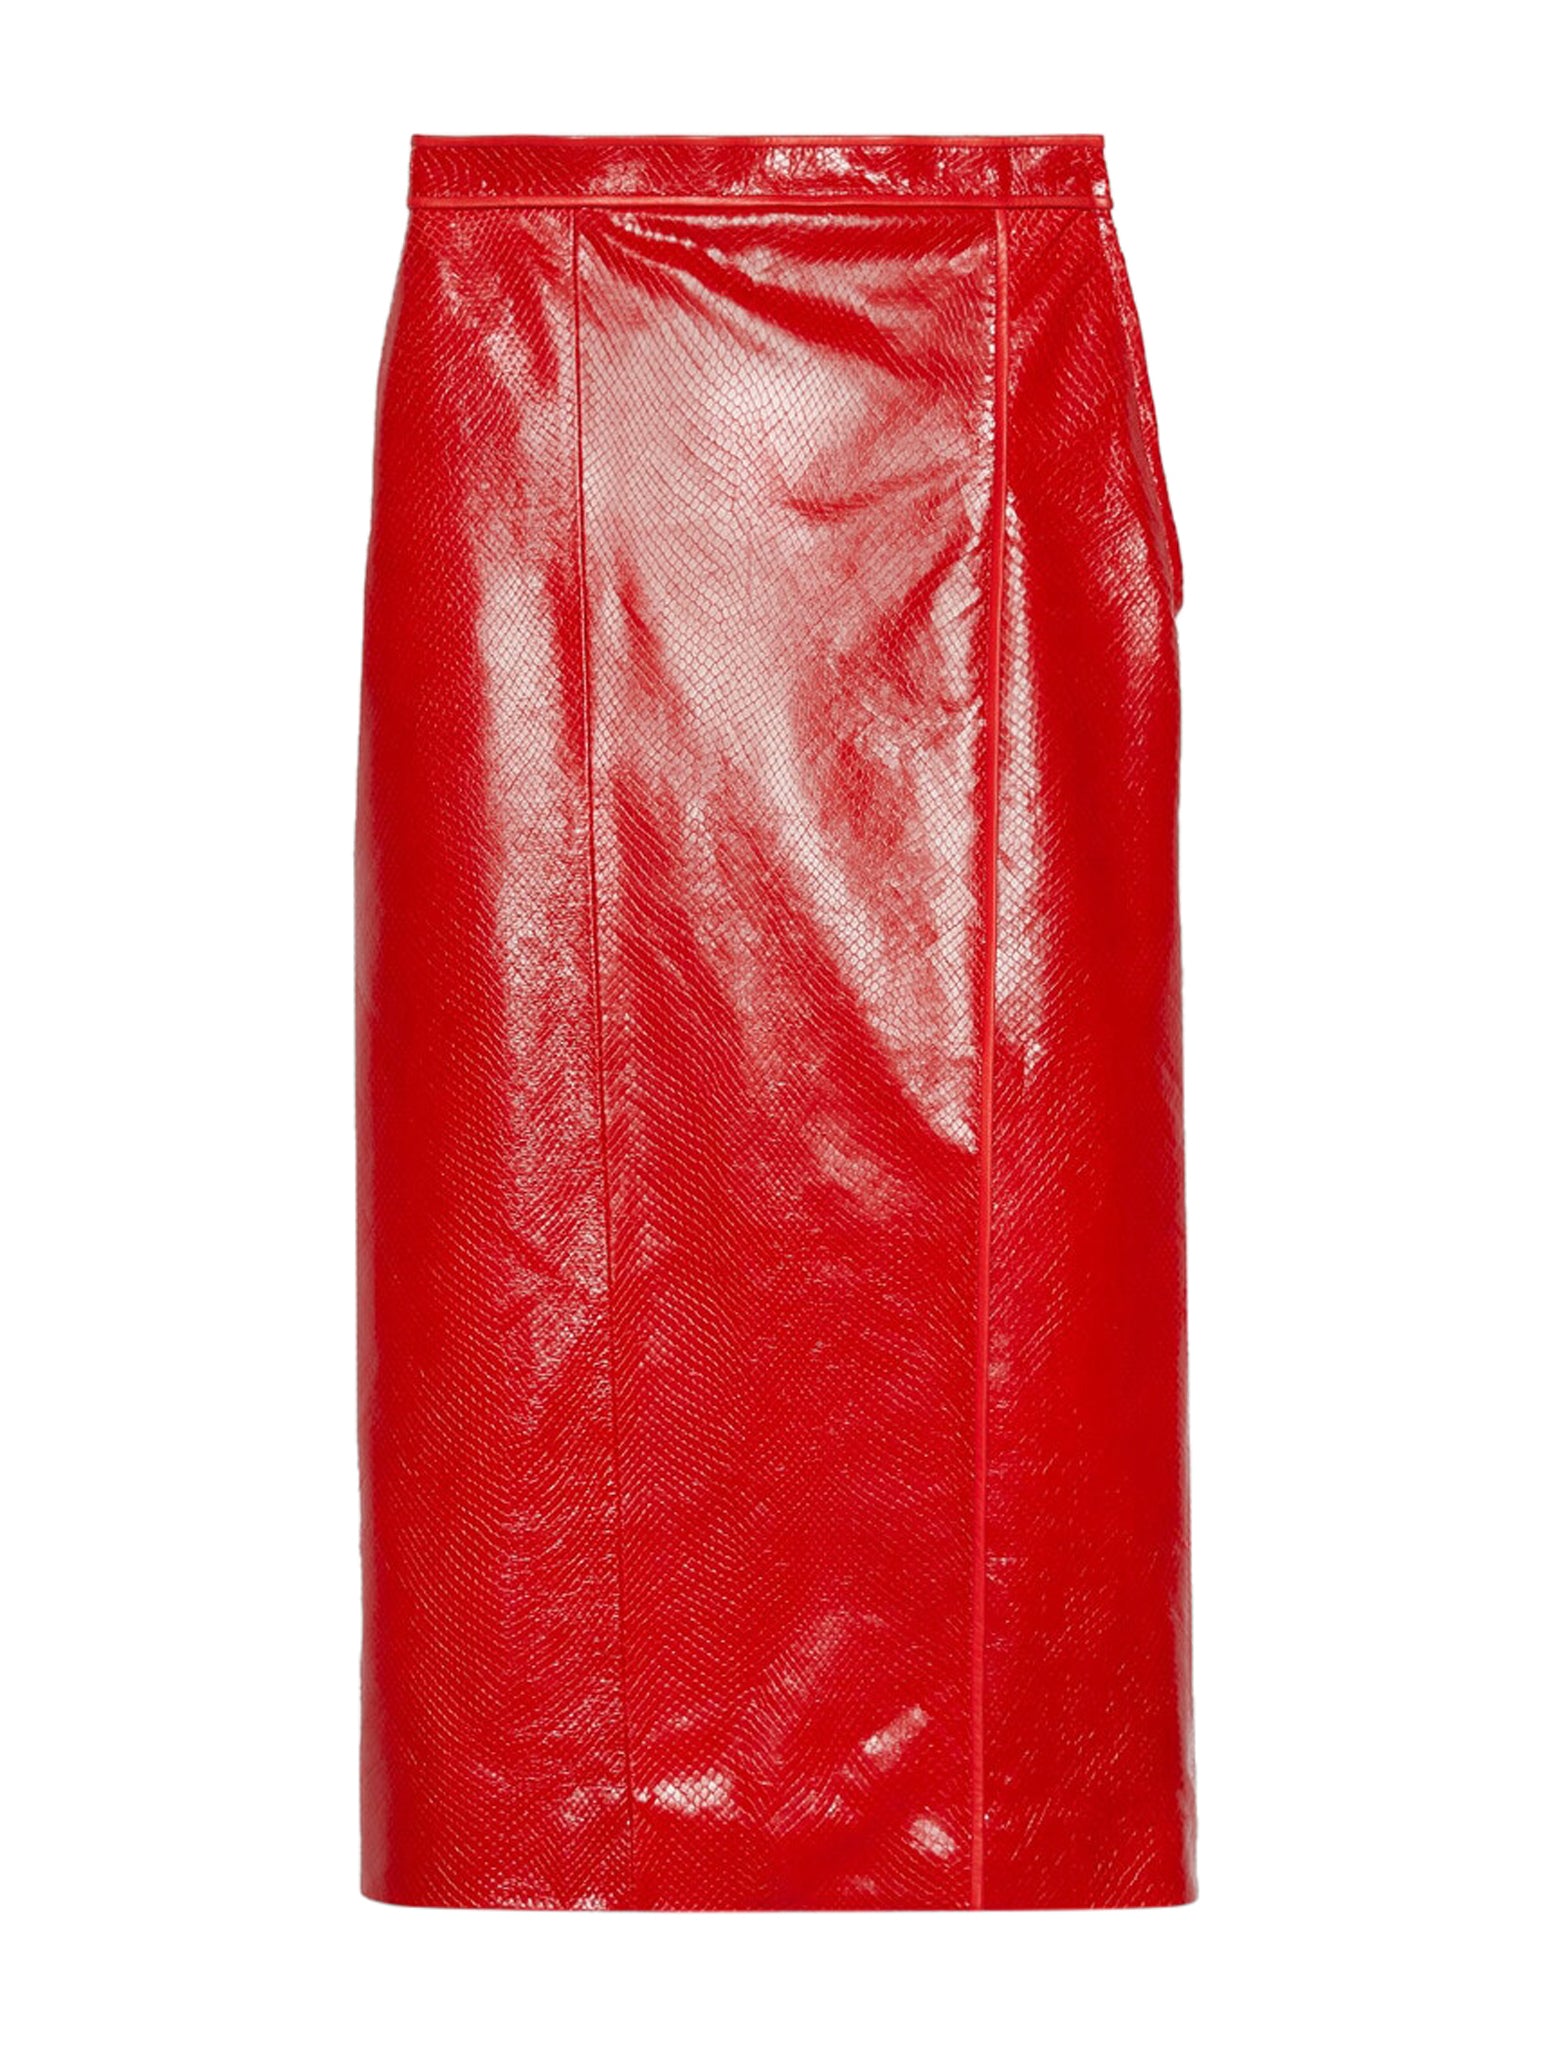 Python print leather skirt